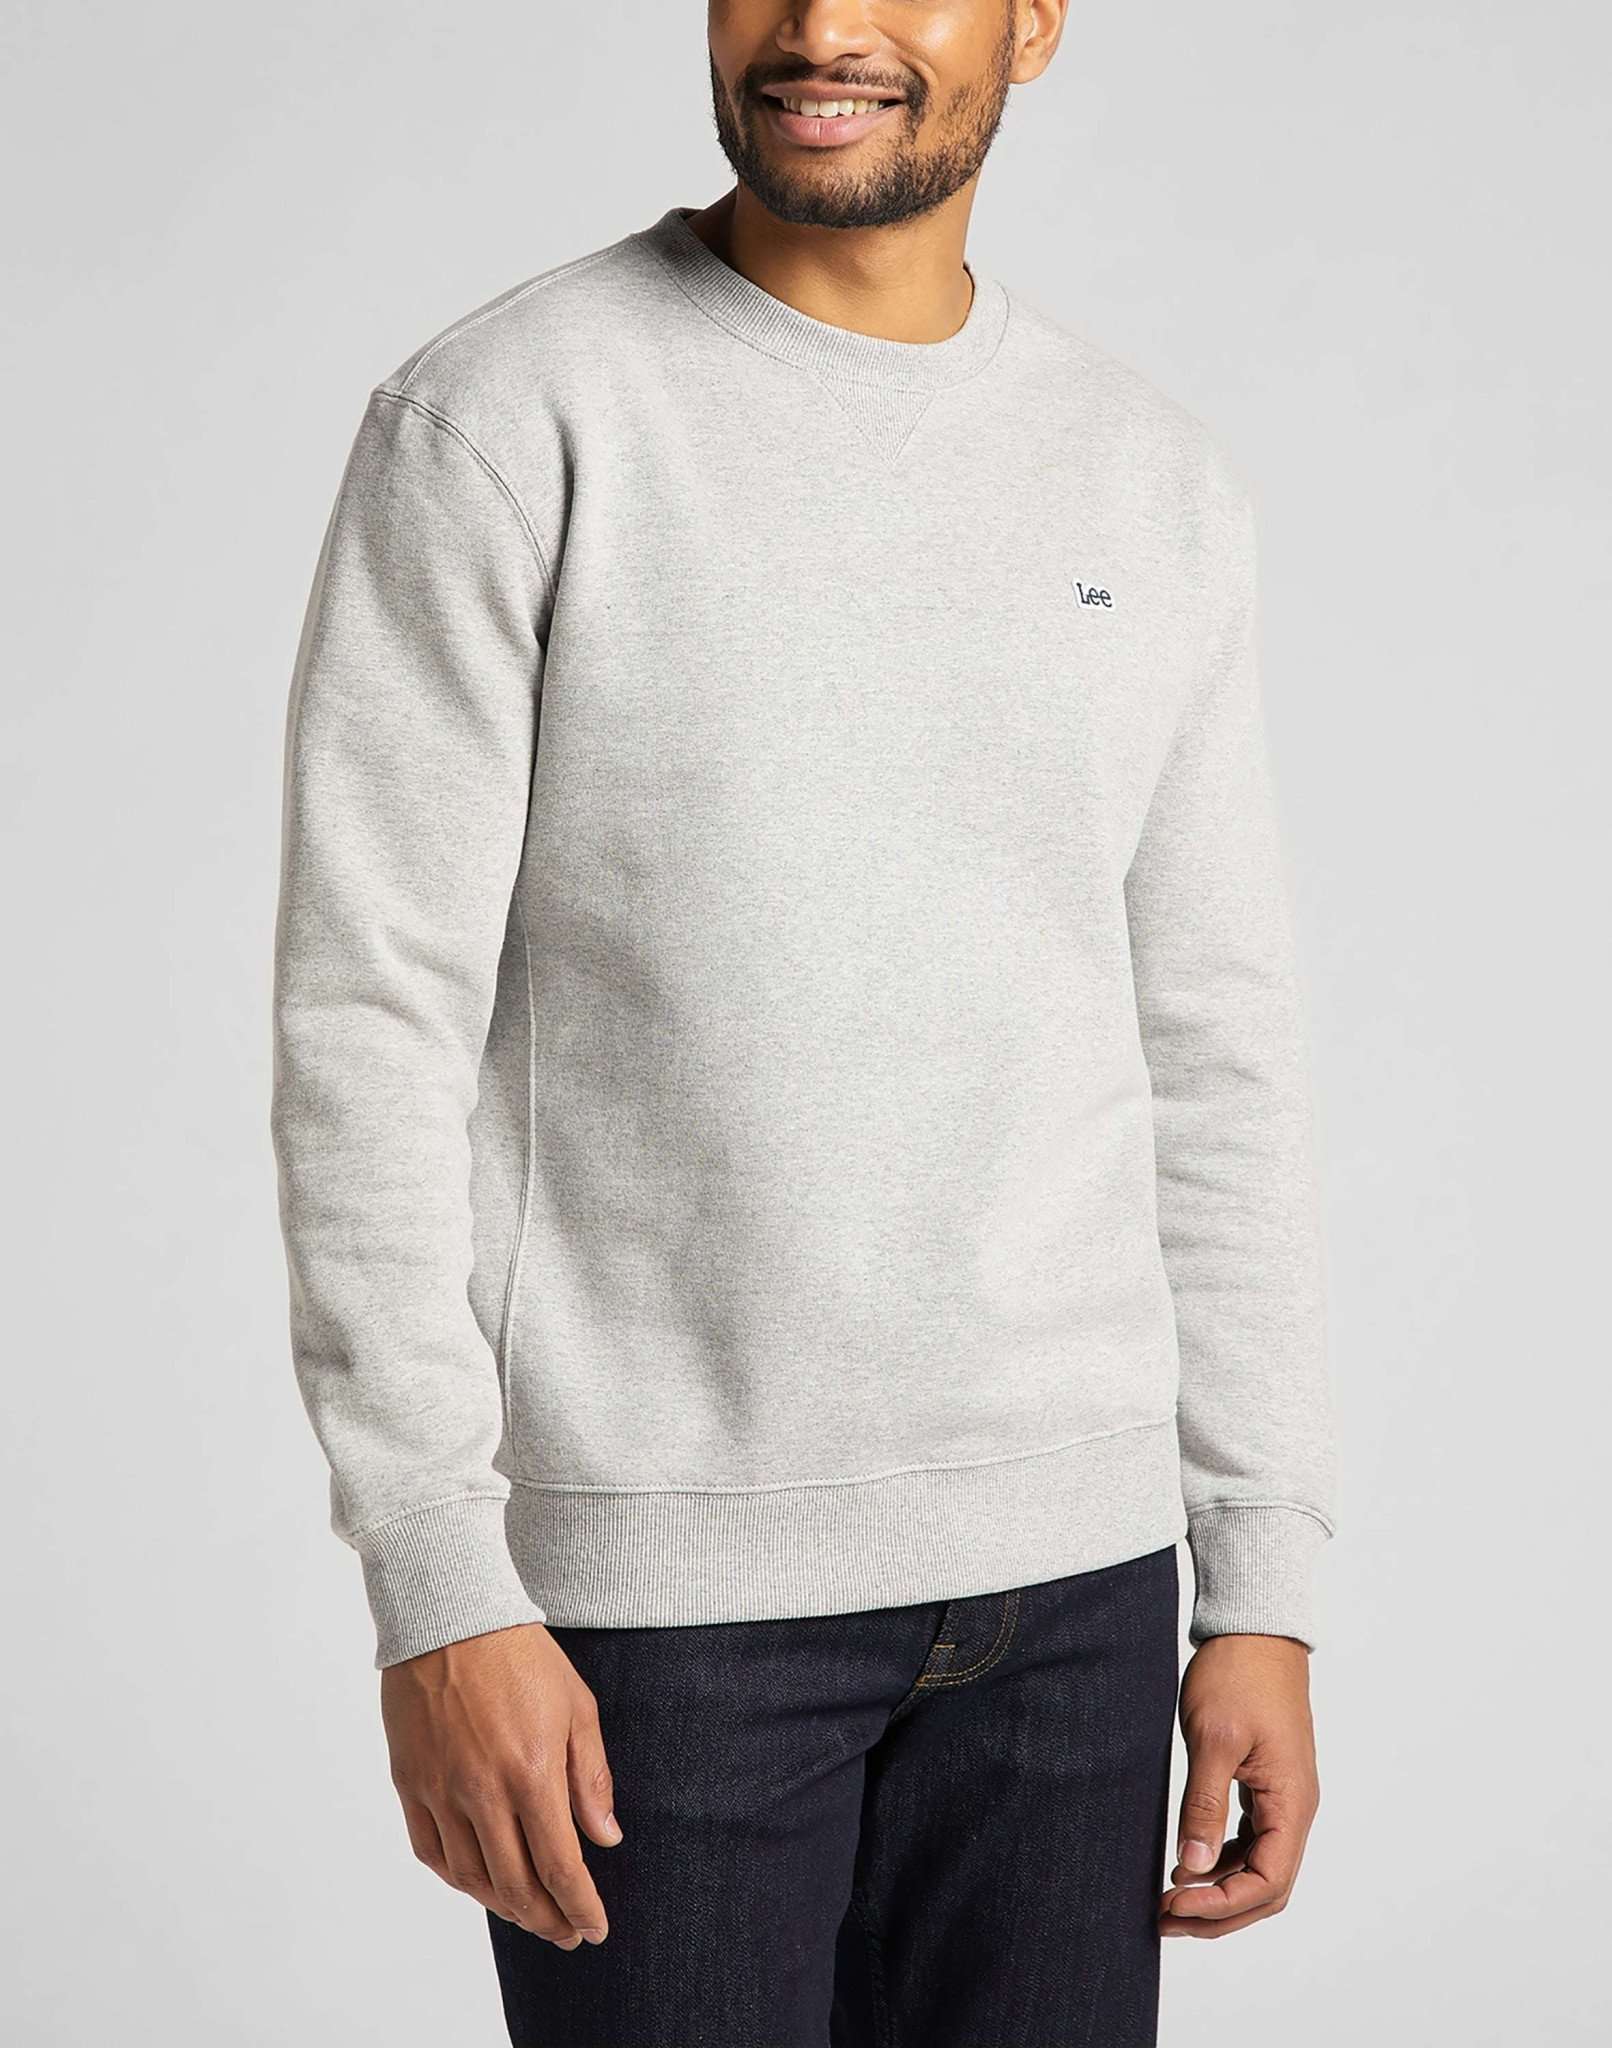 Plain Crew Sweatshirt in Grey Melange Sweatshirts Lee   